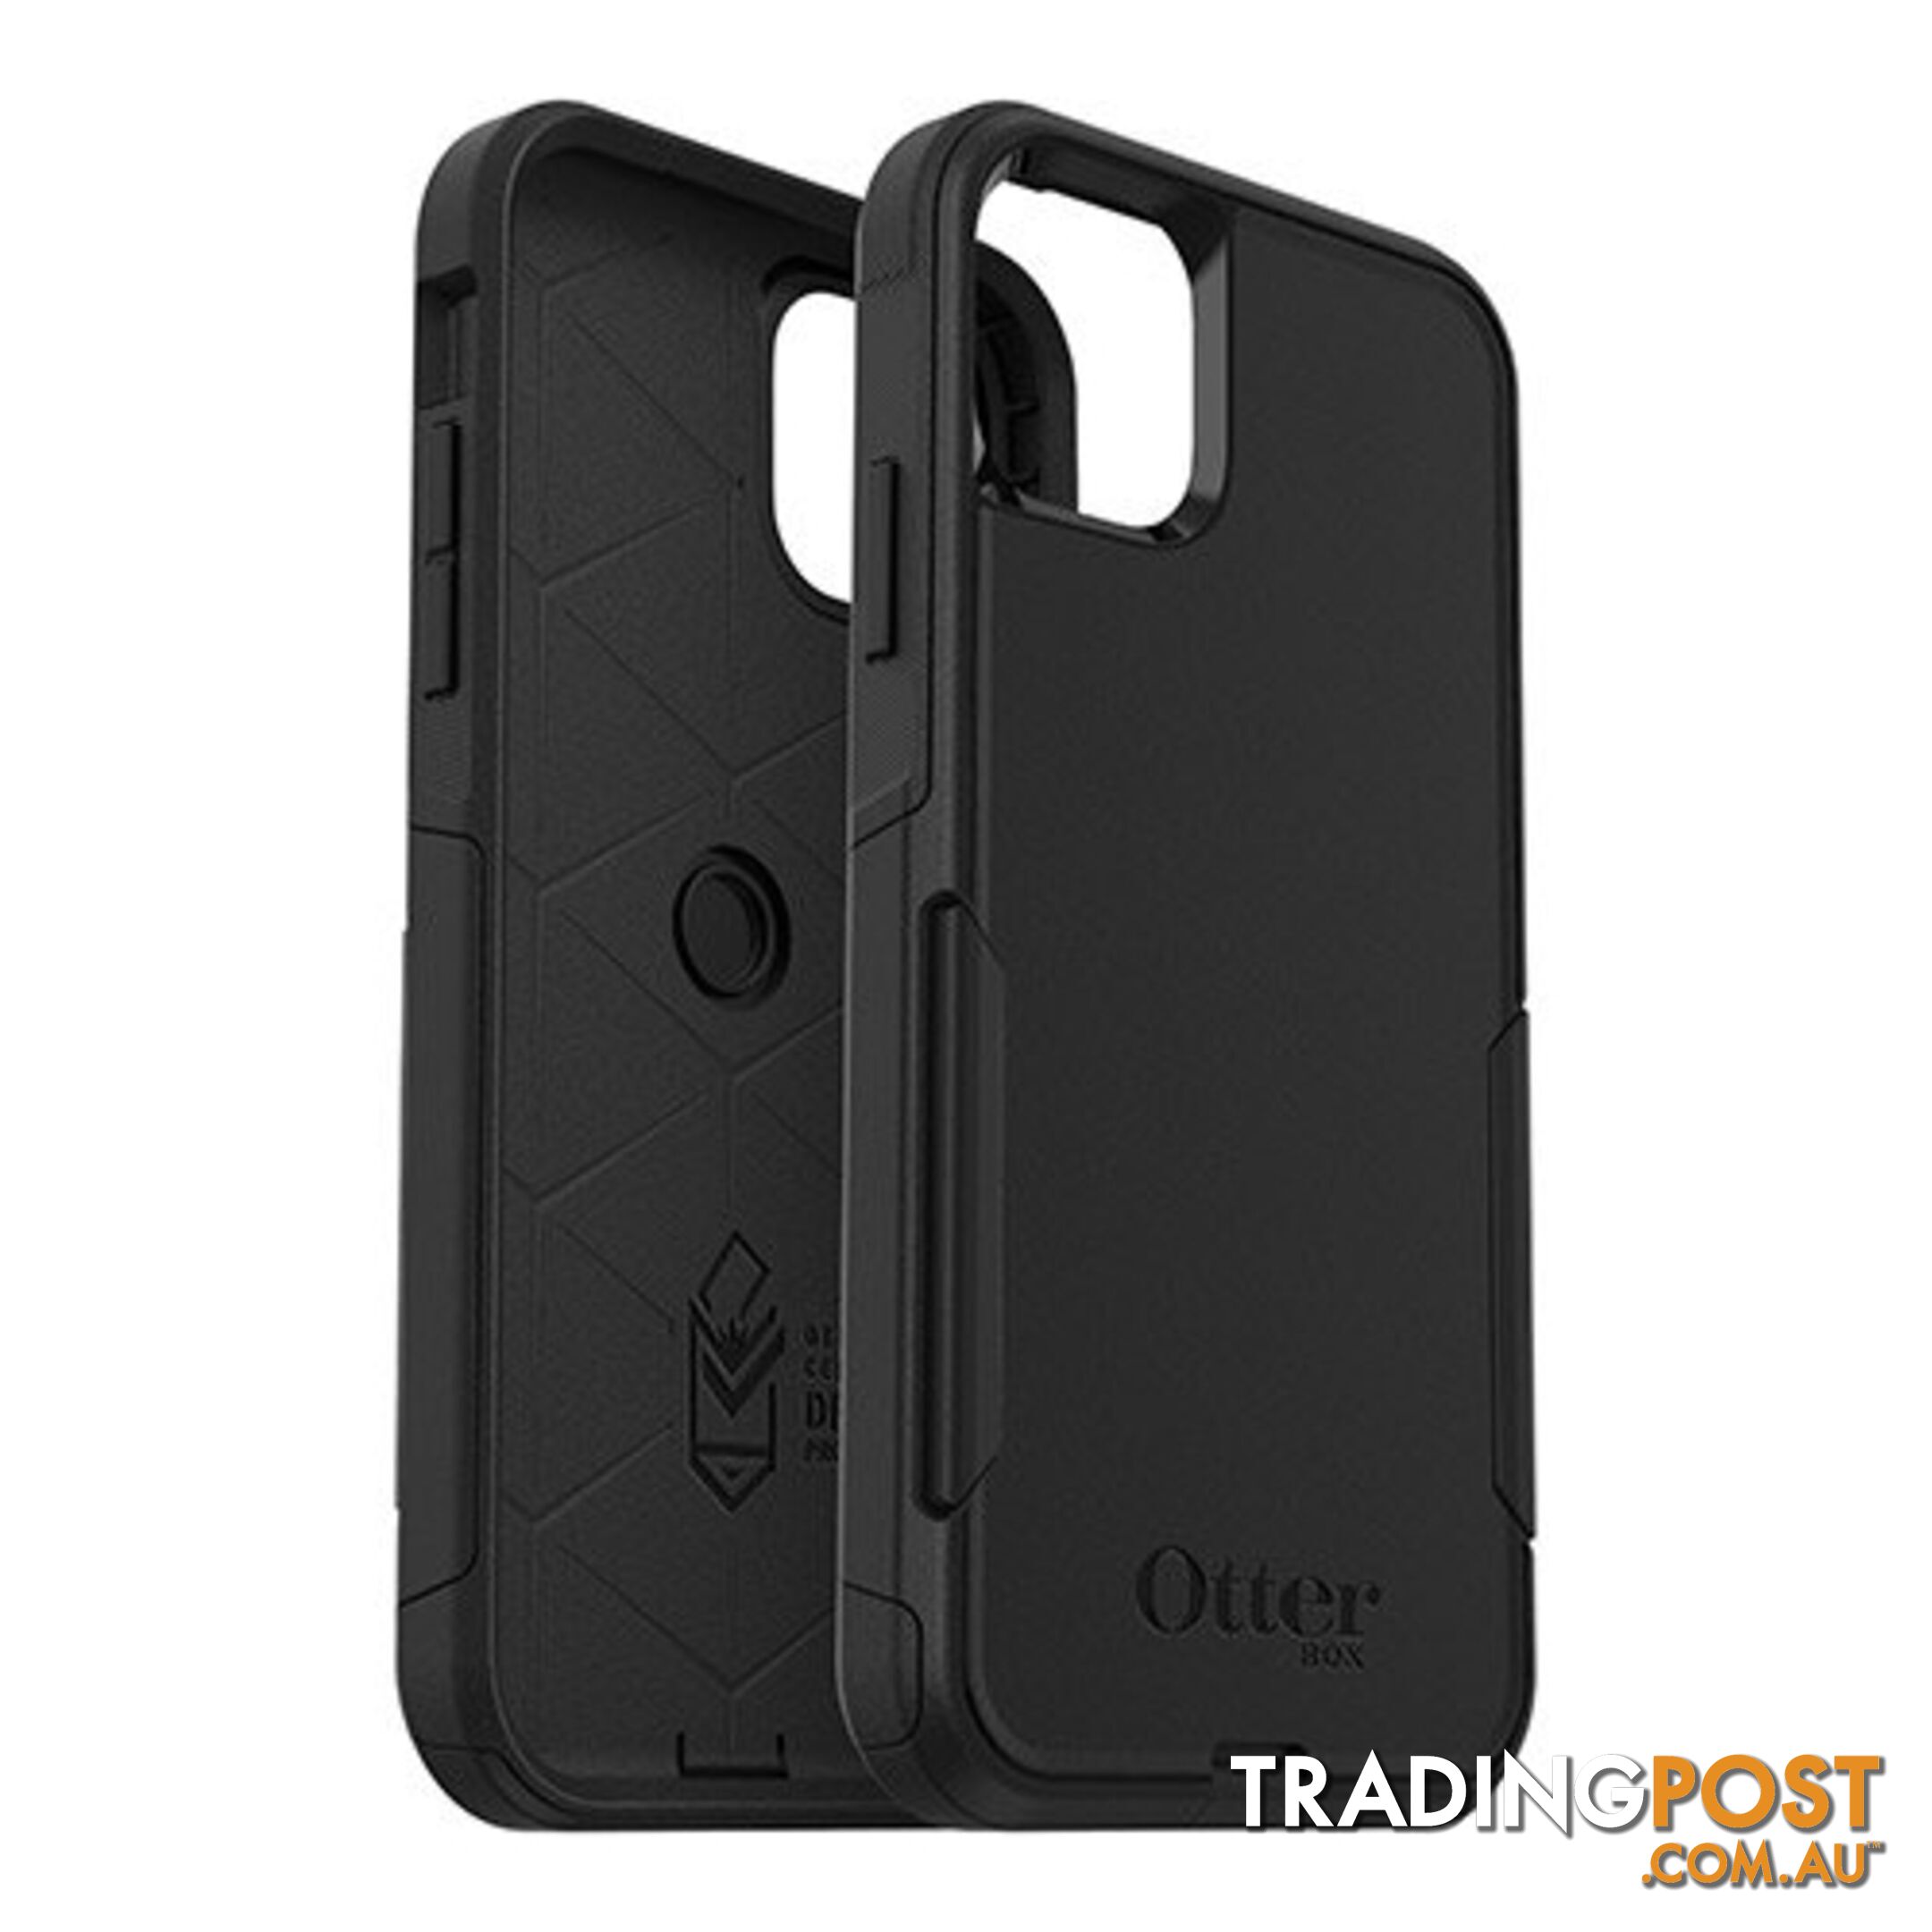 Otterbox Commuter iPhone 11 Pro 5.8 inch Screen - Black - 660543511267/77-62525 - OtterBox